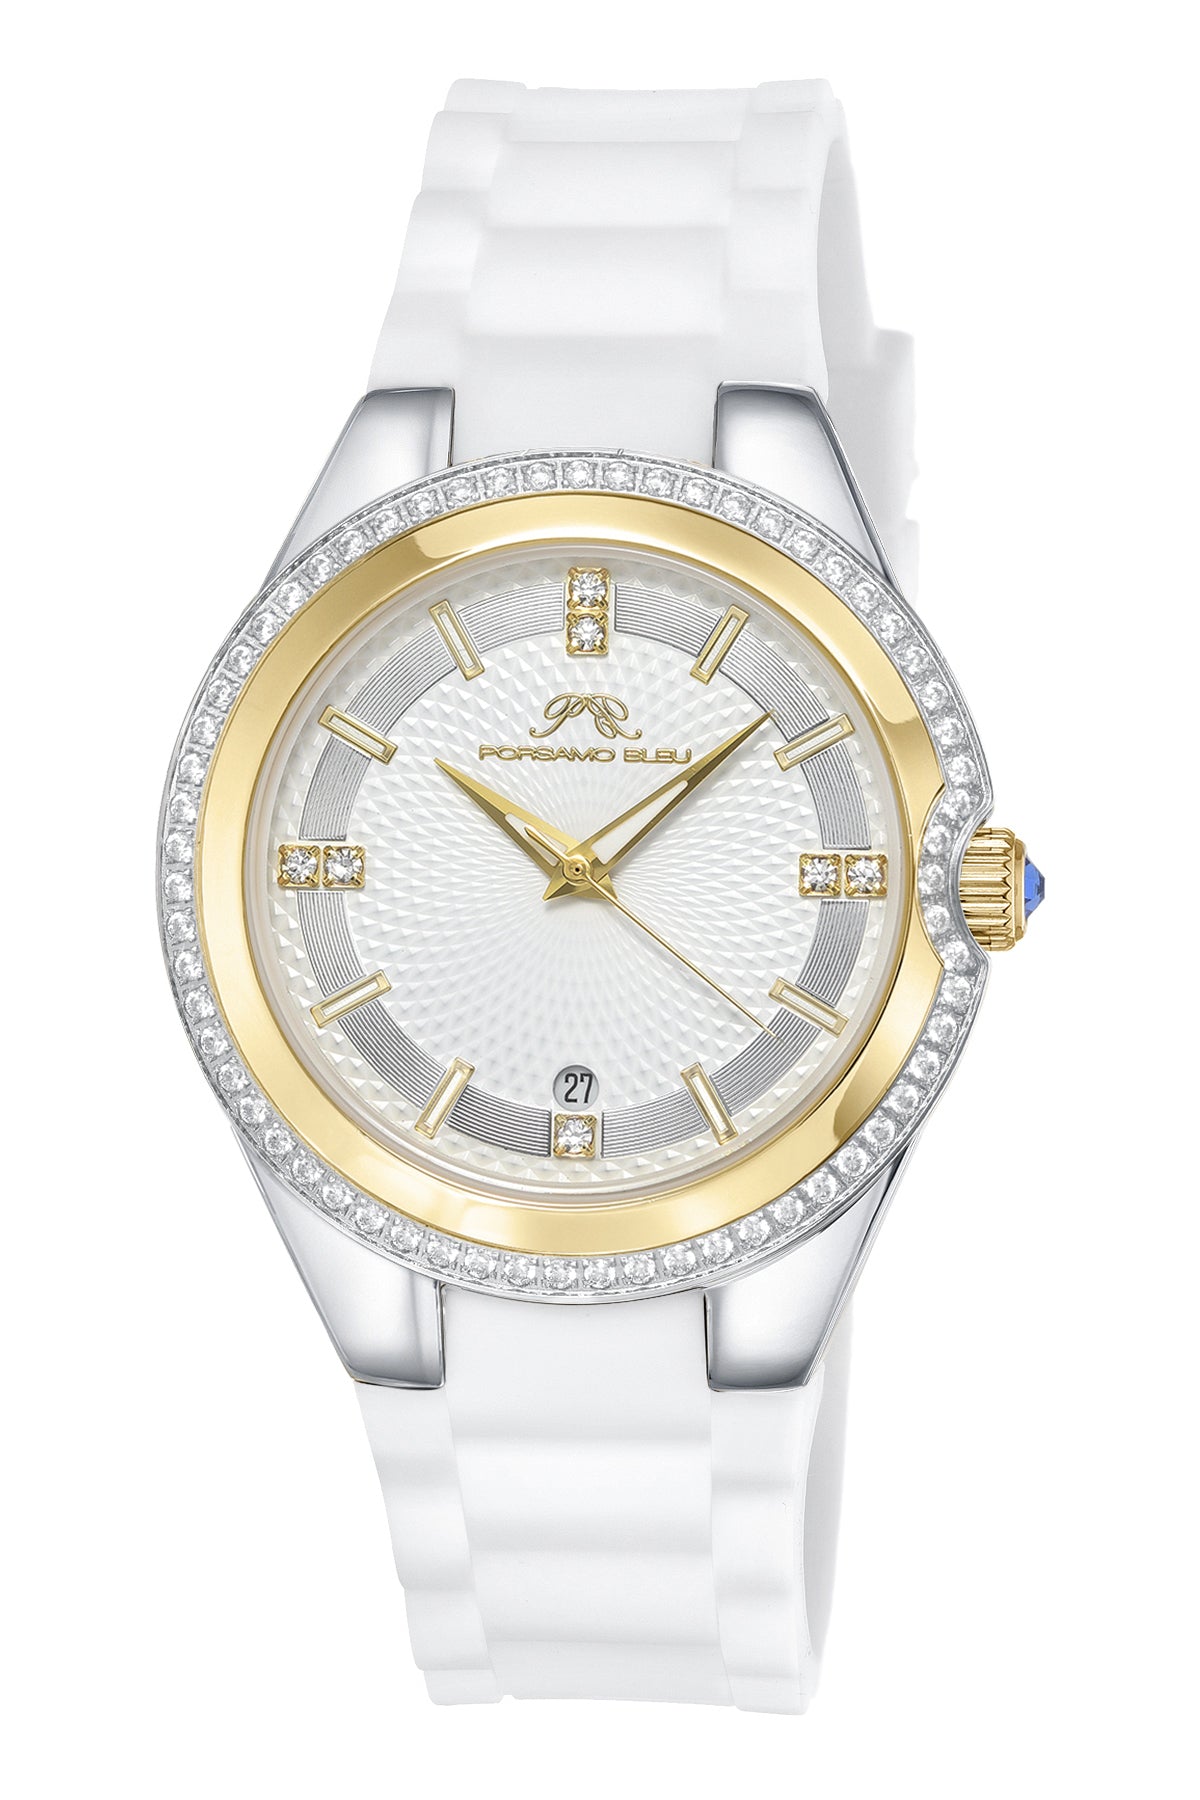 Porsamo Bleu Guilia Luxury Women's Stainless Steel Watch, Interchangeable Bands, Gold, Silver, White 1121EGUS